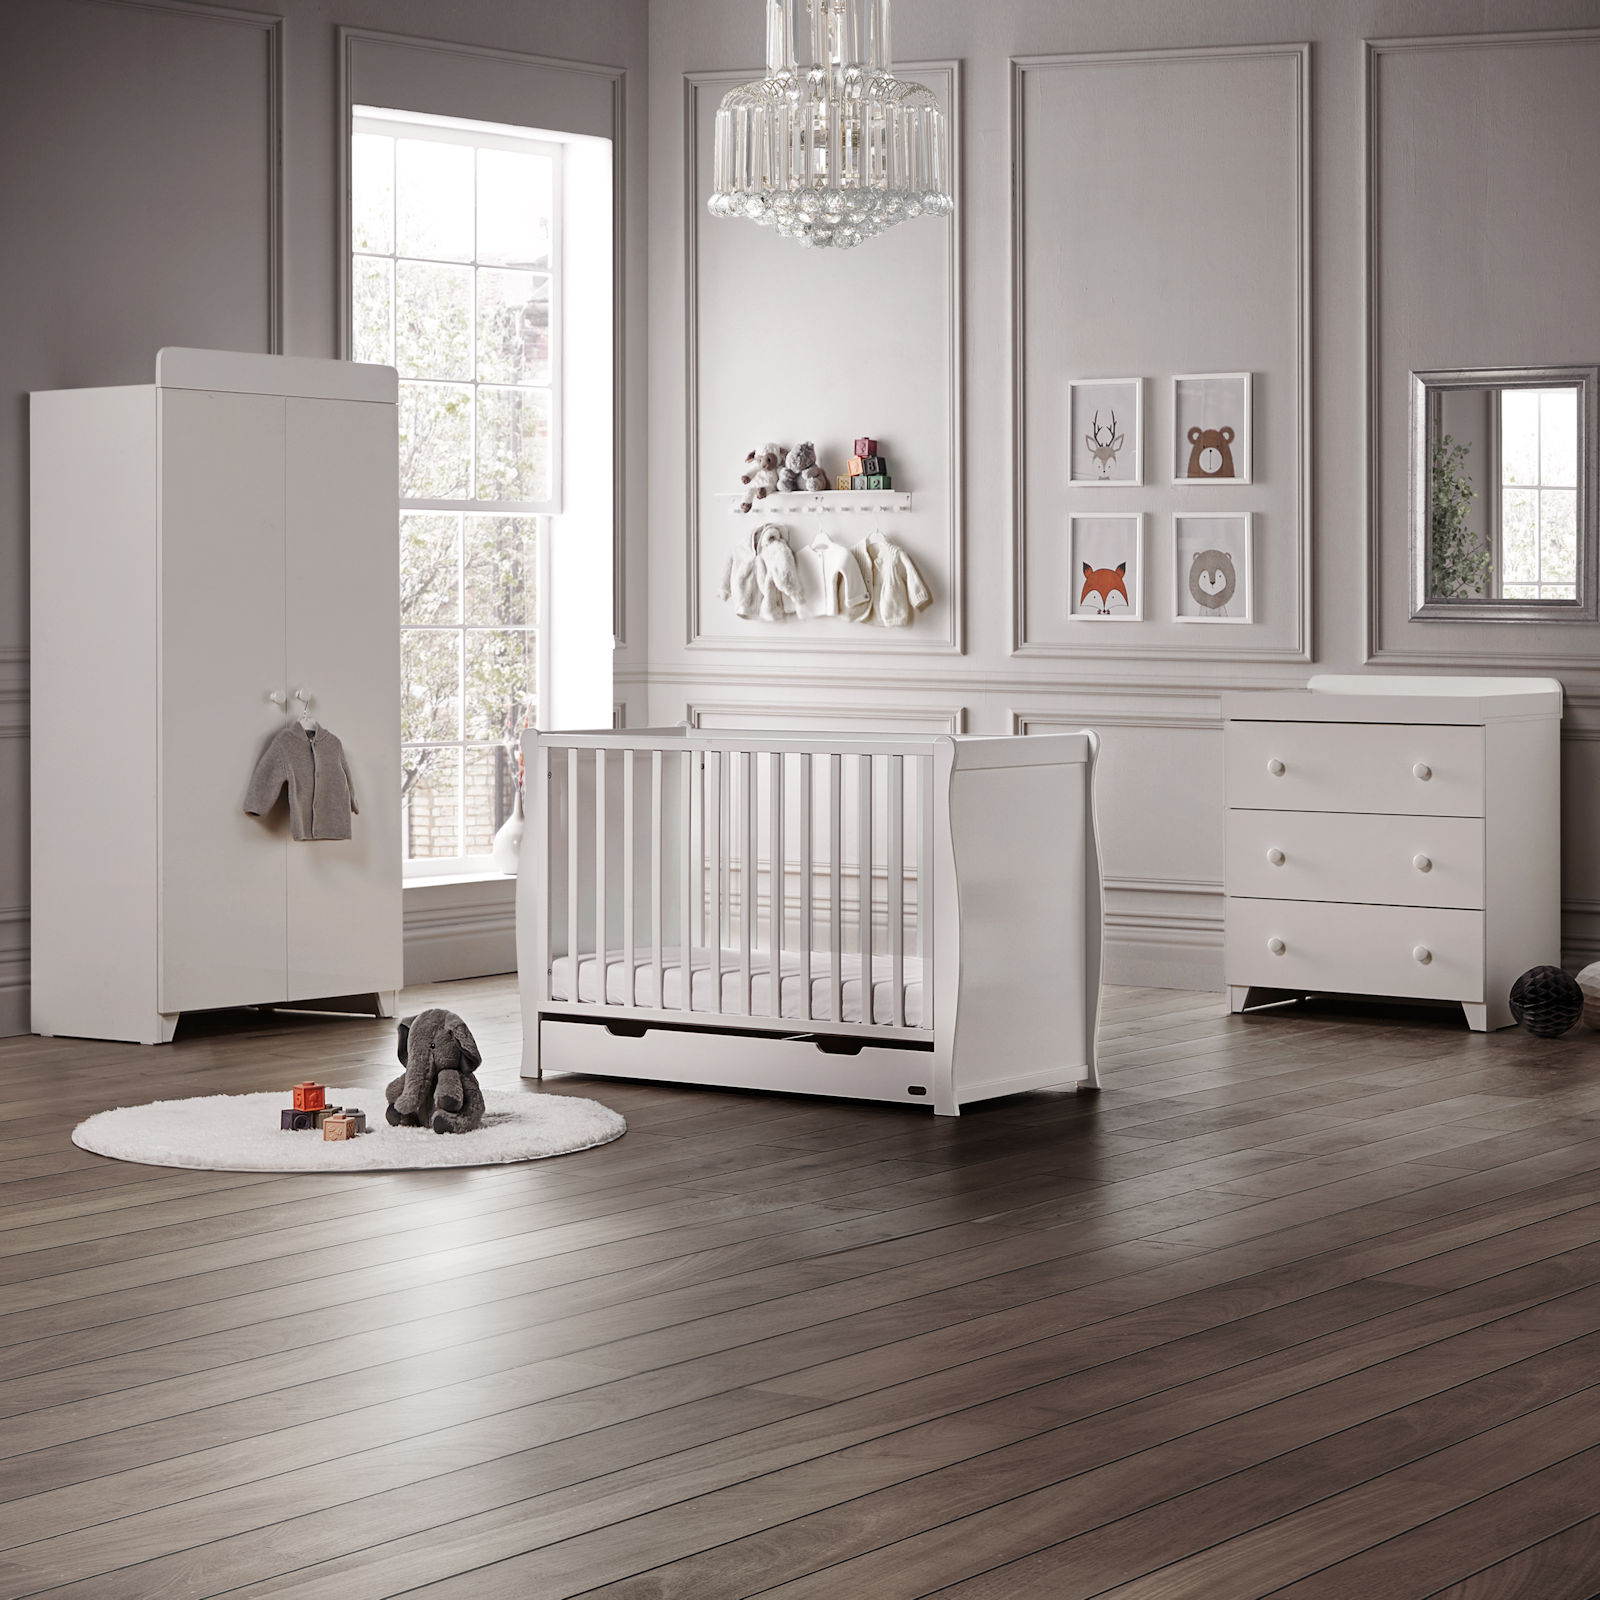 Puggle Chelford Sleigh Cot 6 Piece Nursery Furniture Set & Eco Fibre Cot Mattress - White